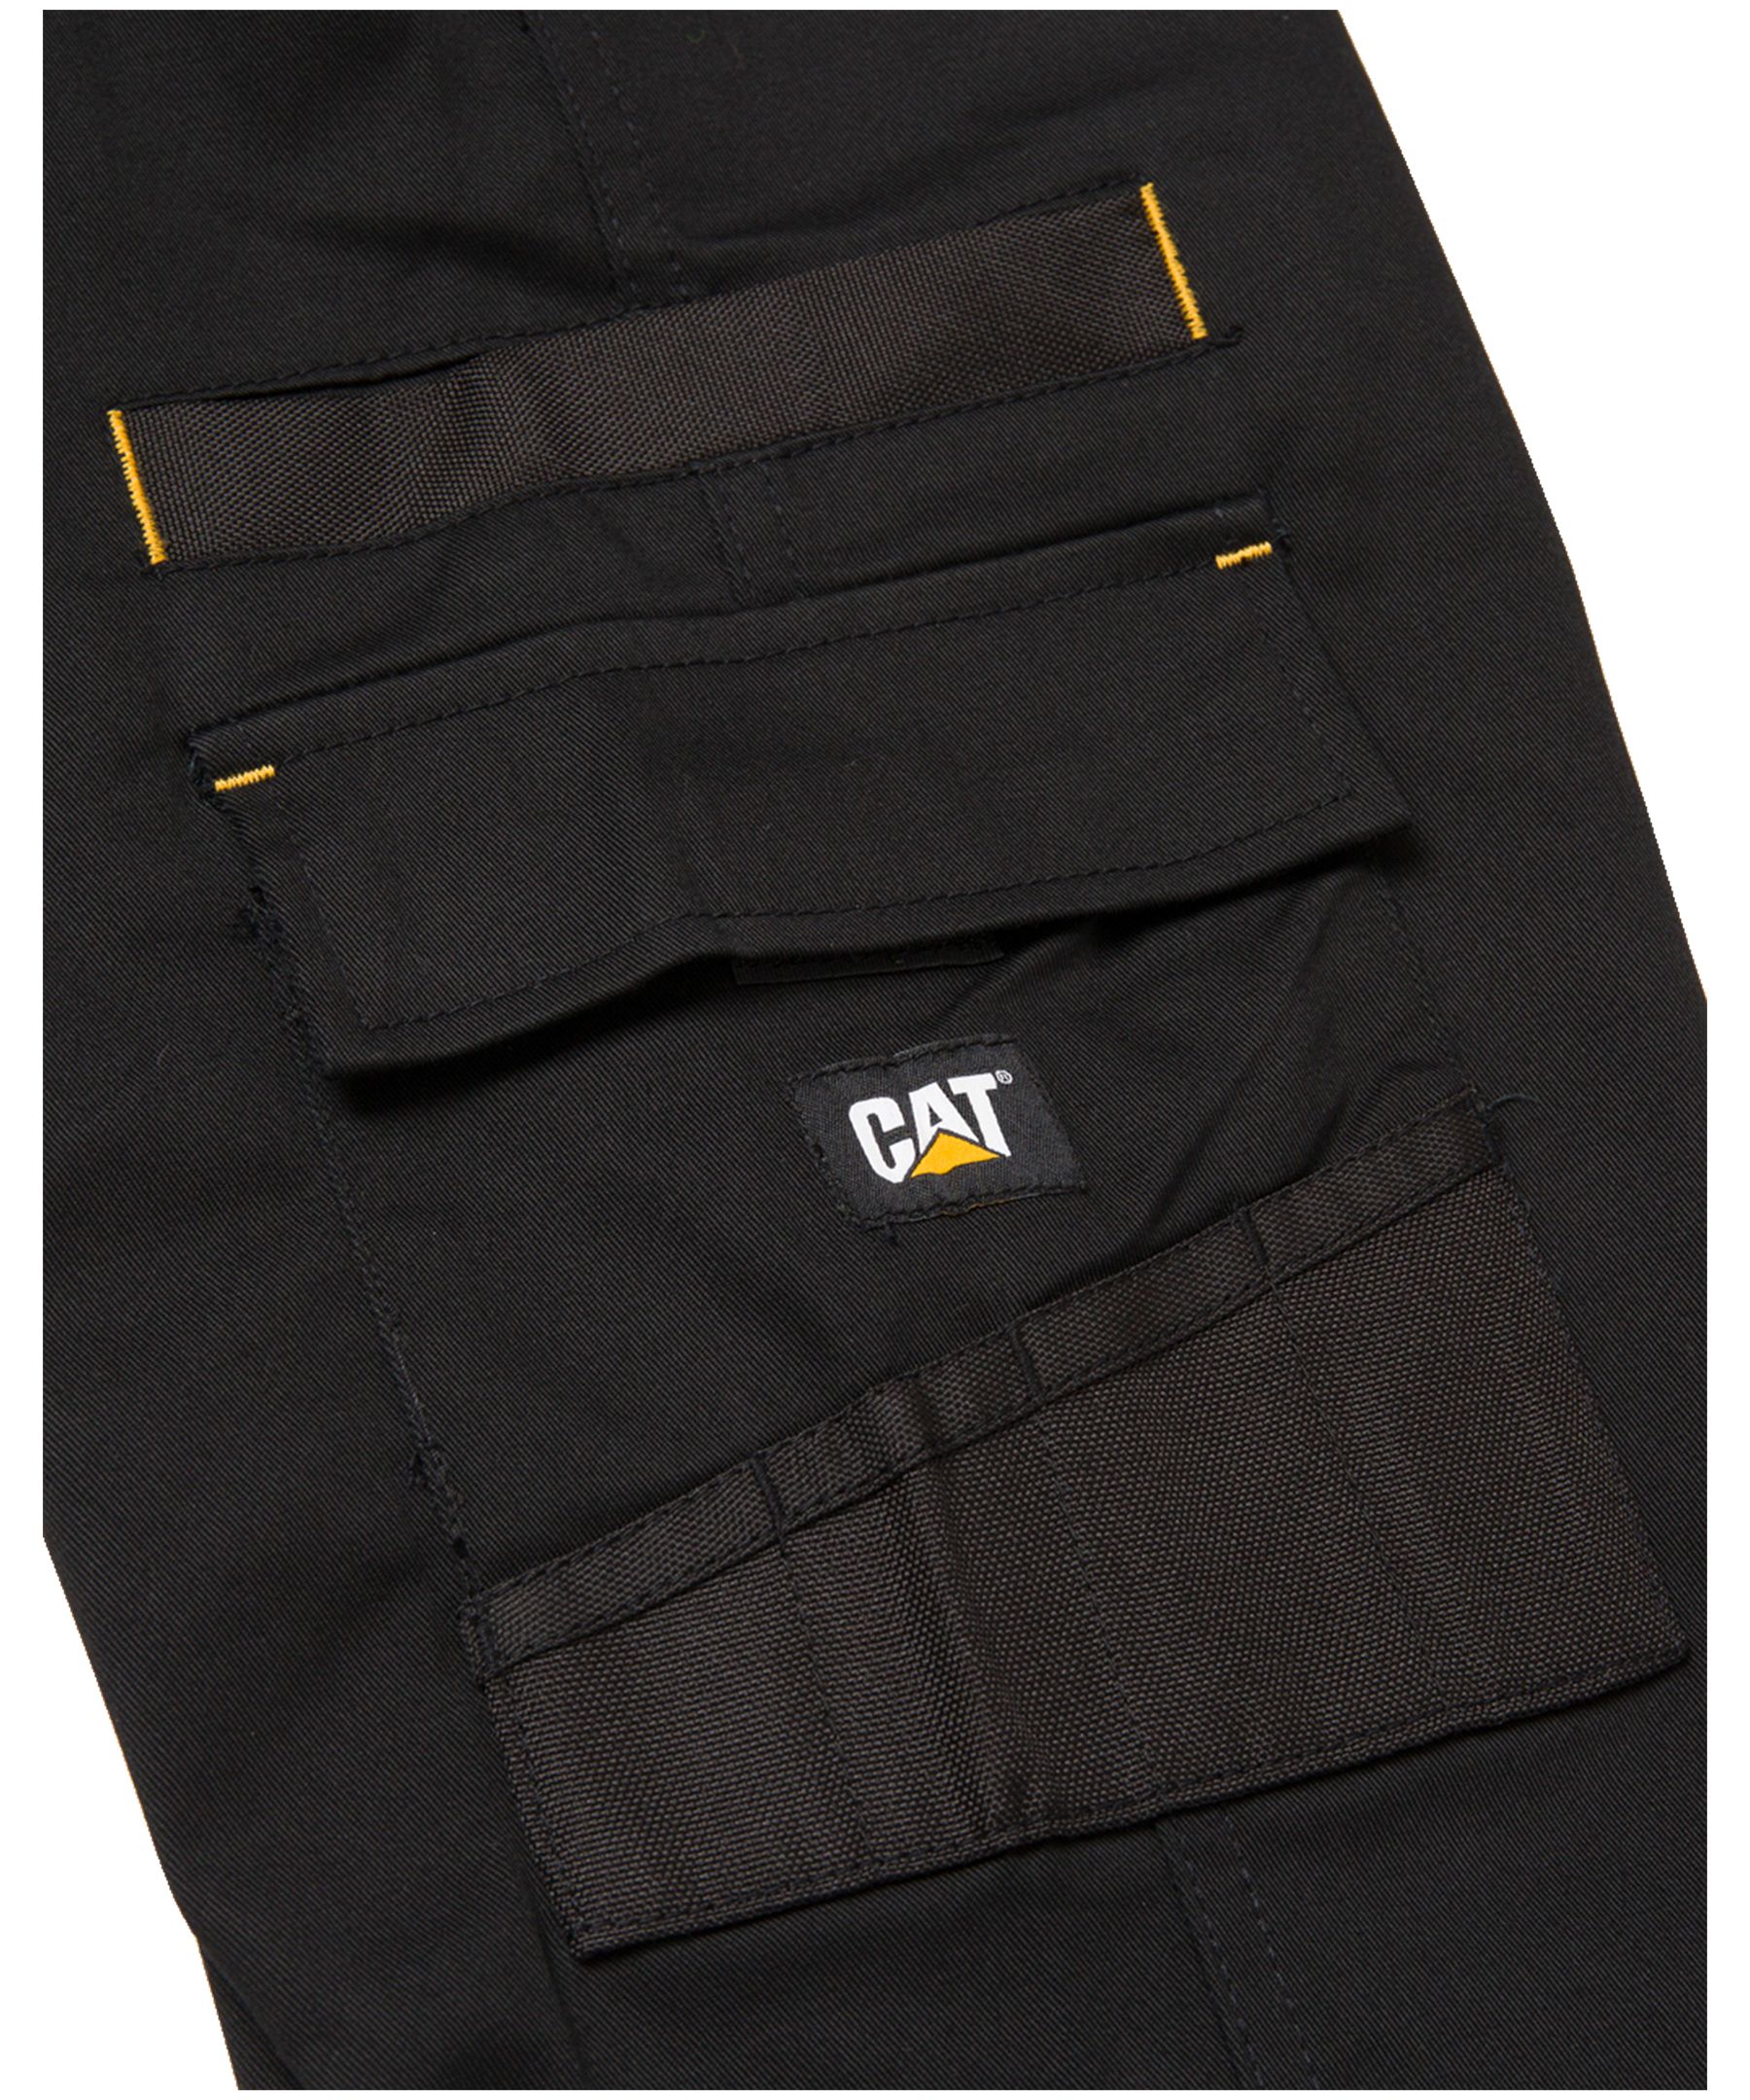 Caterpillar - CAT Women's Mid Rise Slim Fit Elite Operator Work Pants ...